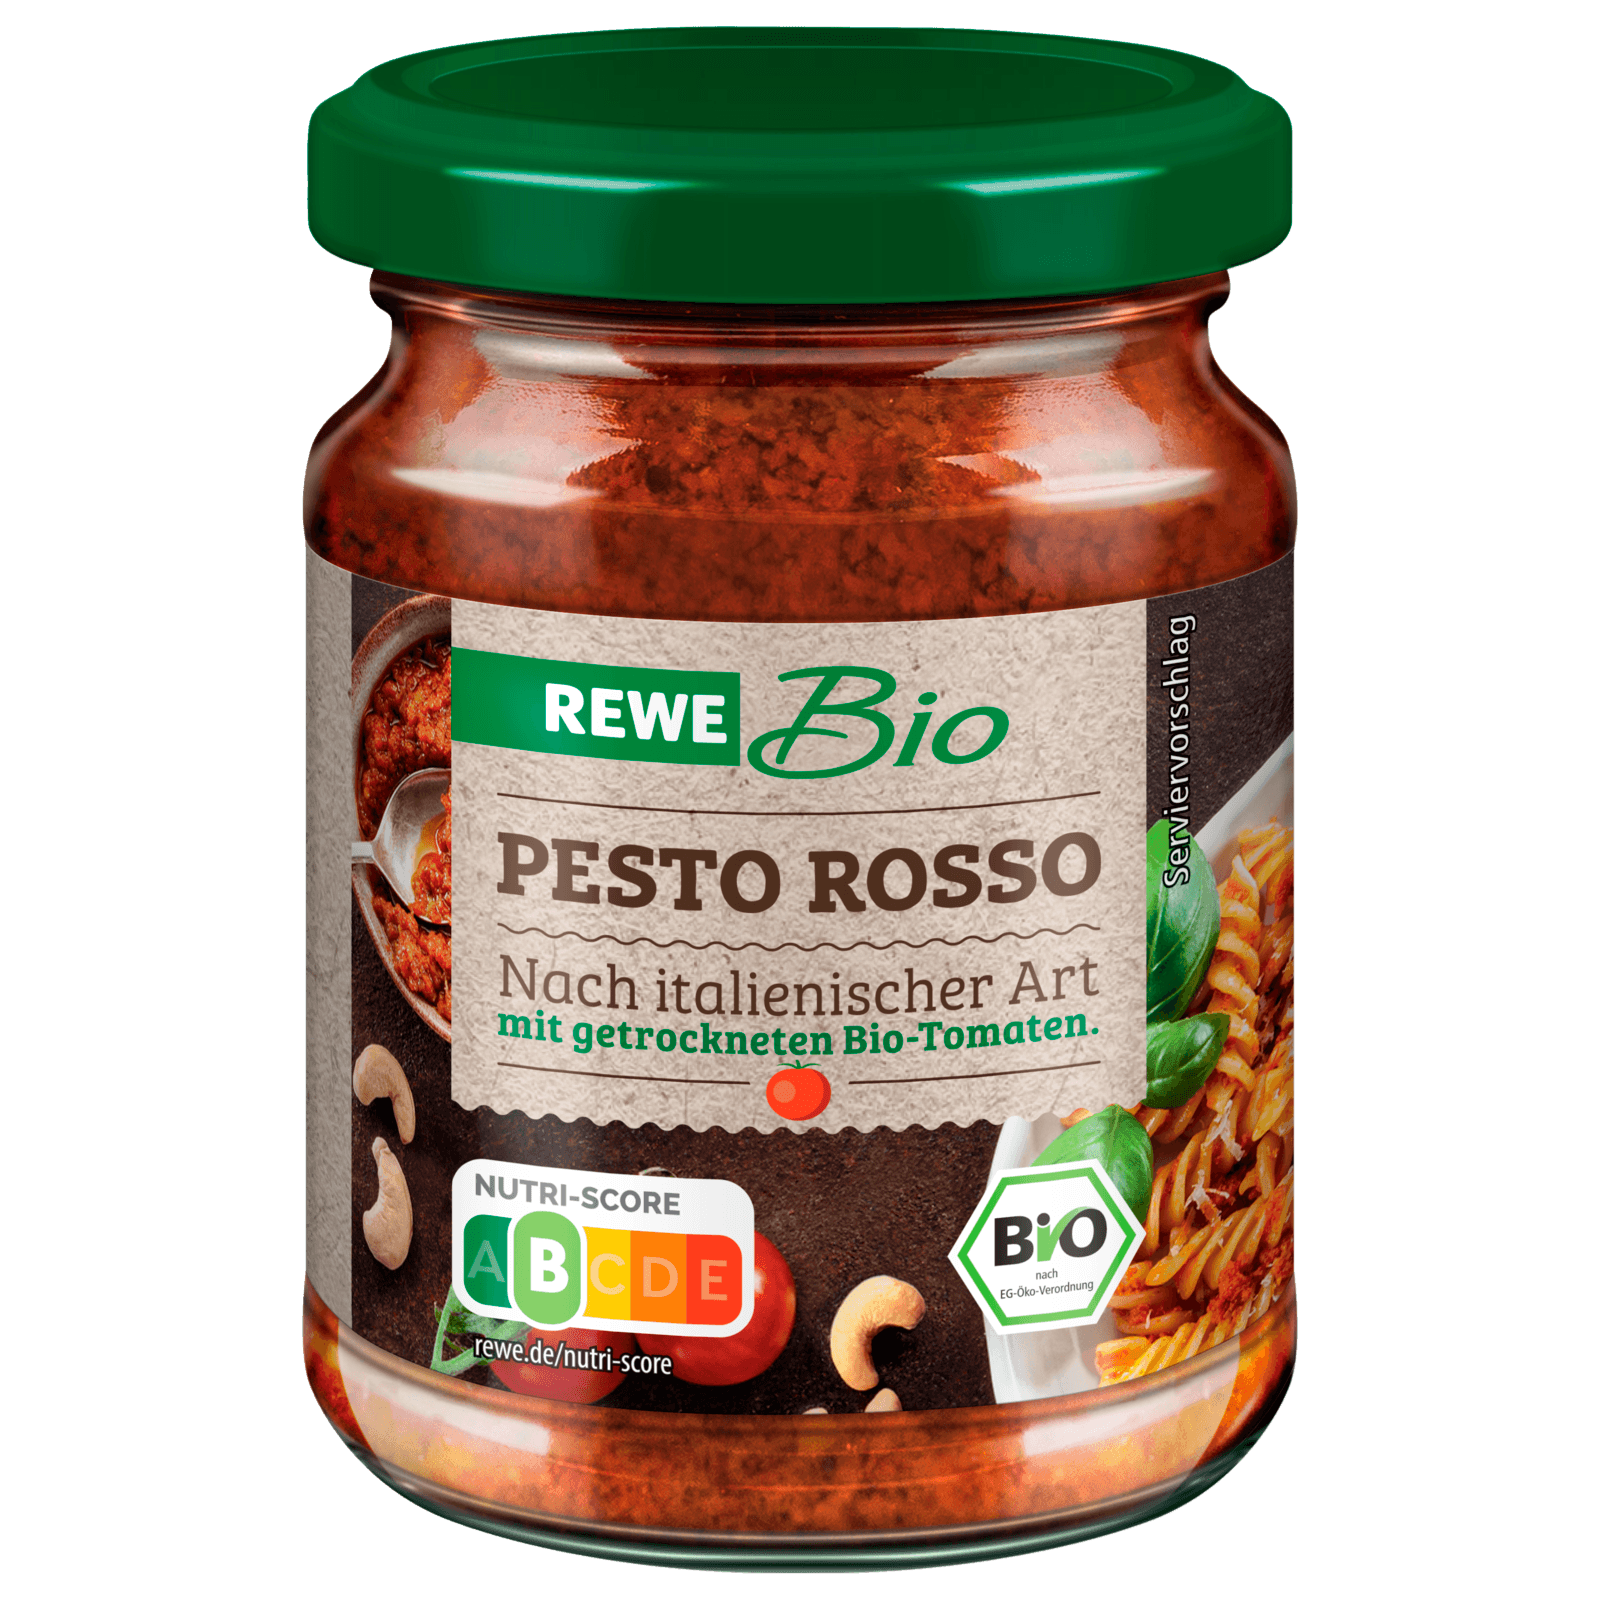 REWE Bio Pesto Rosso Vegan 130g